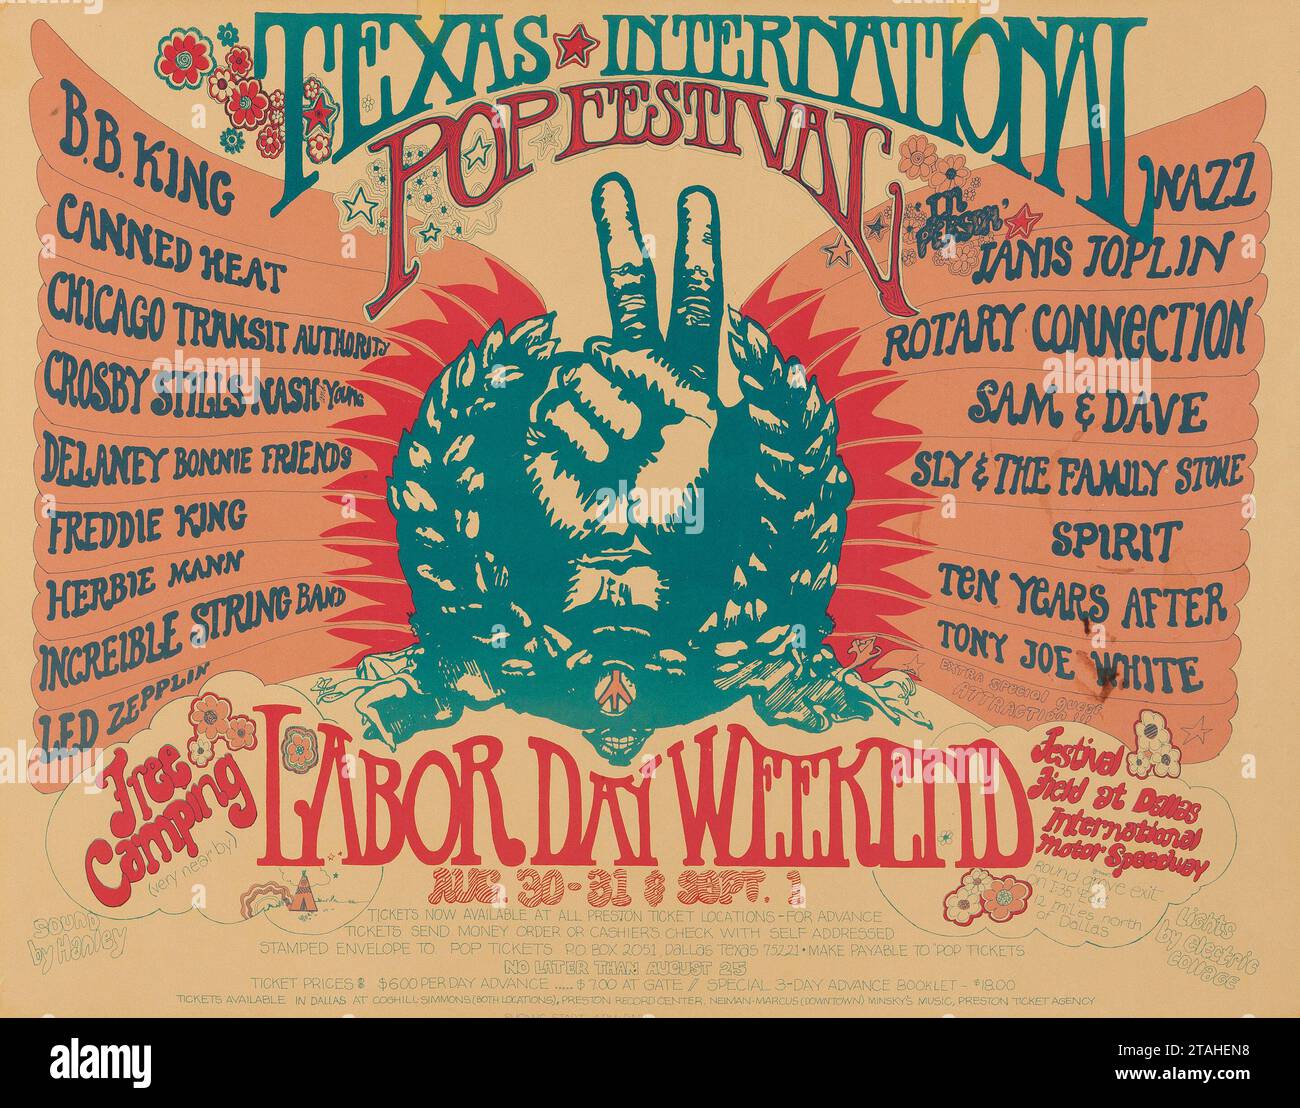 Texas International Pop Festival Concert Poster (1969) BB King, Canned Heat, LED Zeppelin, Janis Joplin, Ten Years After, Crosby Stills Nash Stockfoto